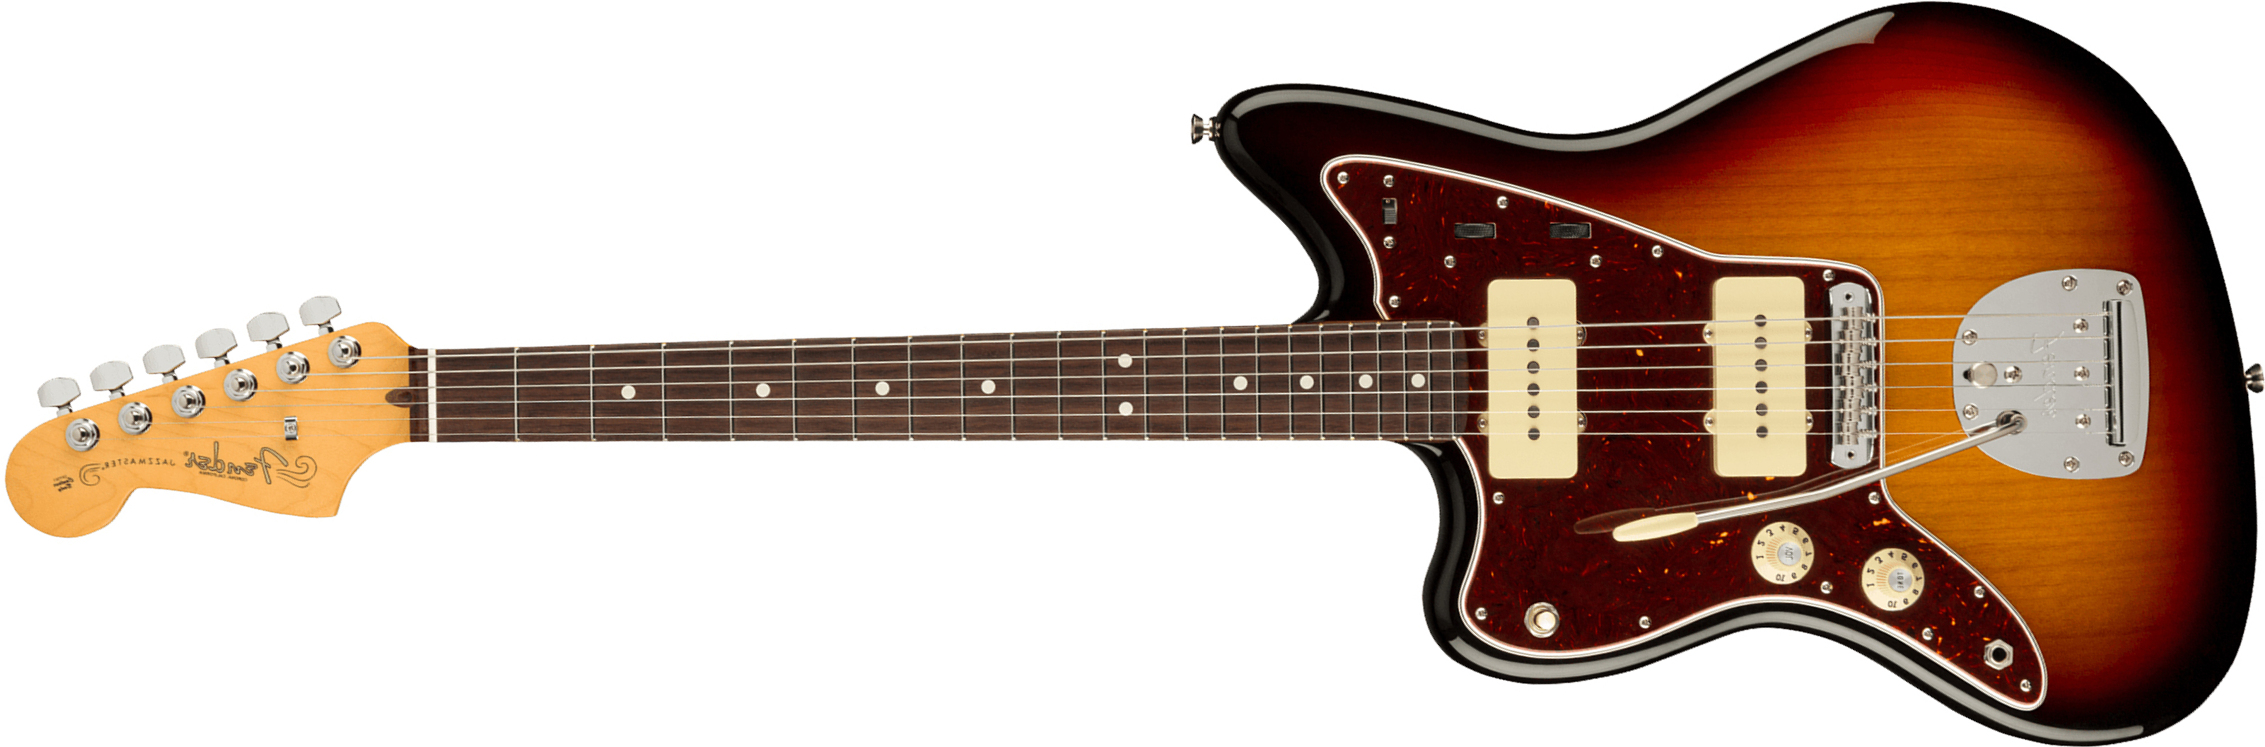 Fender Jazzmaster American Professional Ii Lh Gaucher Usa Rw - 3-color Sunburst - Left-handed electric guitar - Main picture